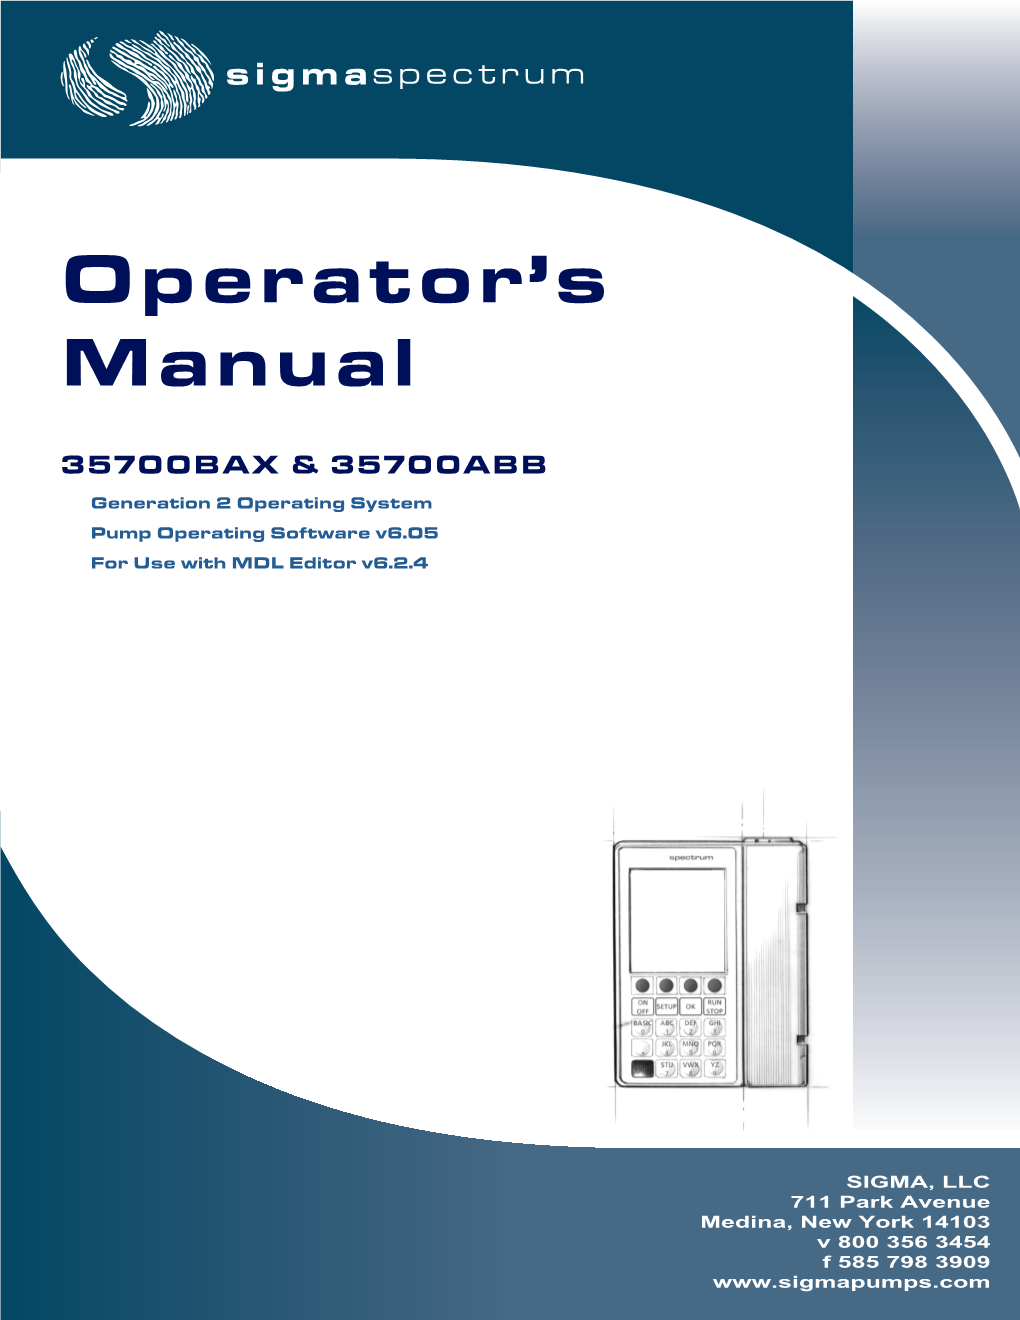 Sigma Spectrum Operator's Manual